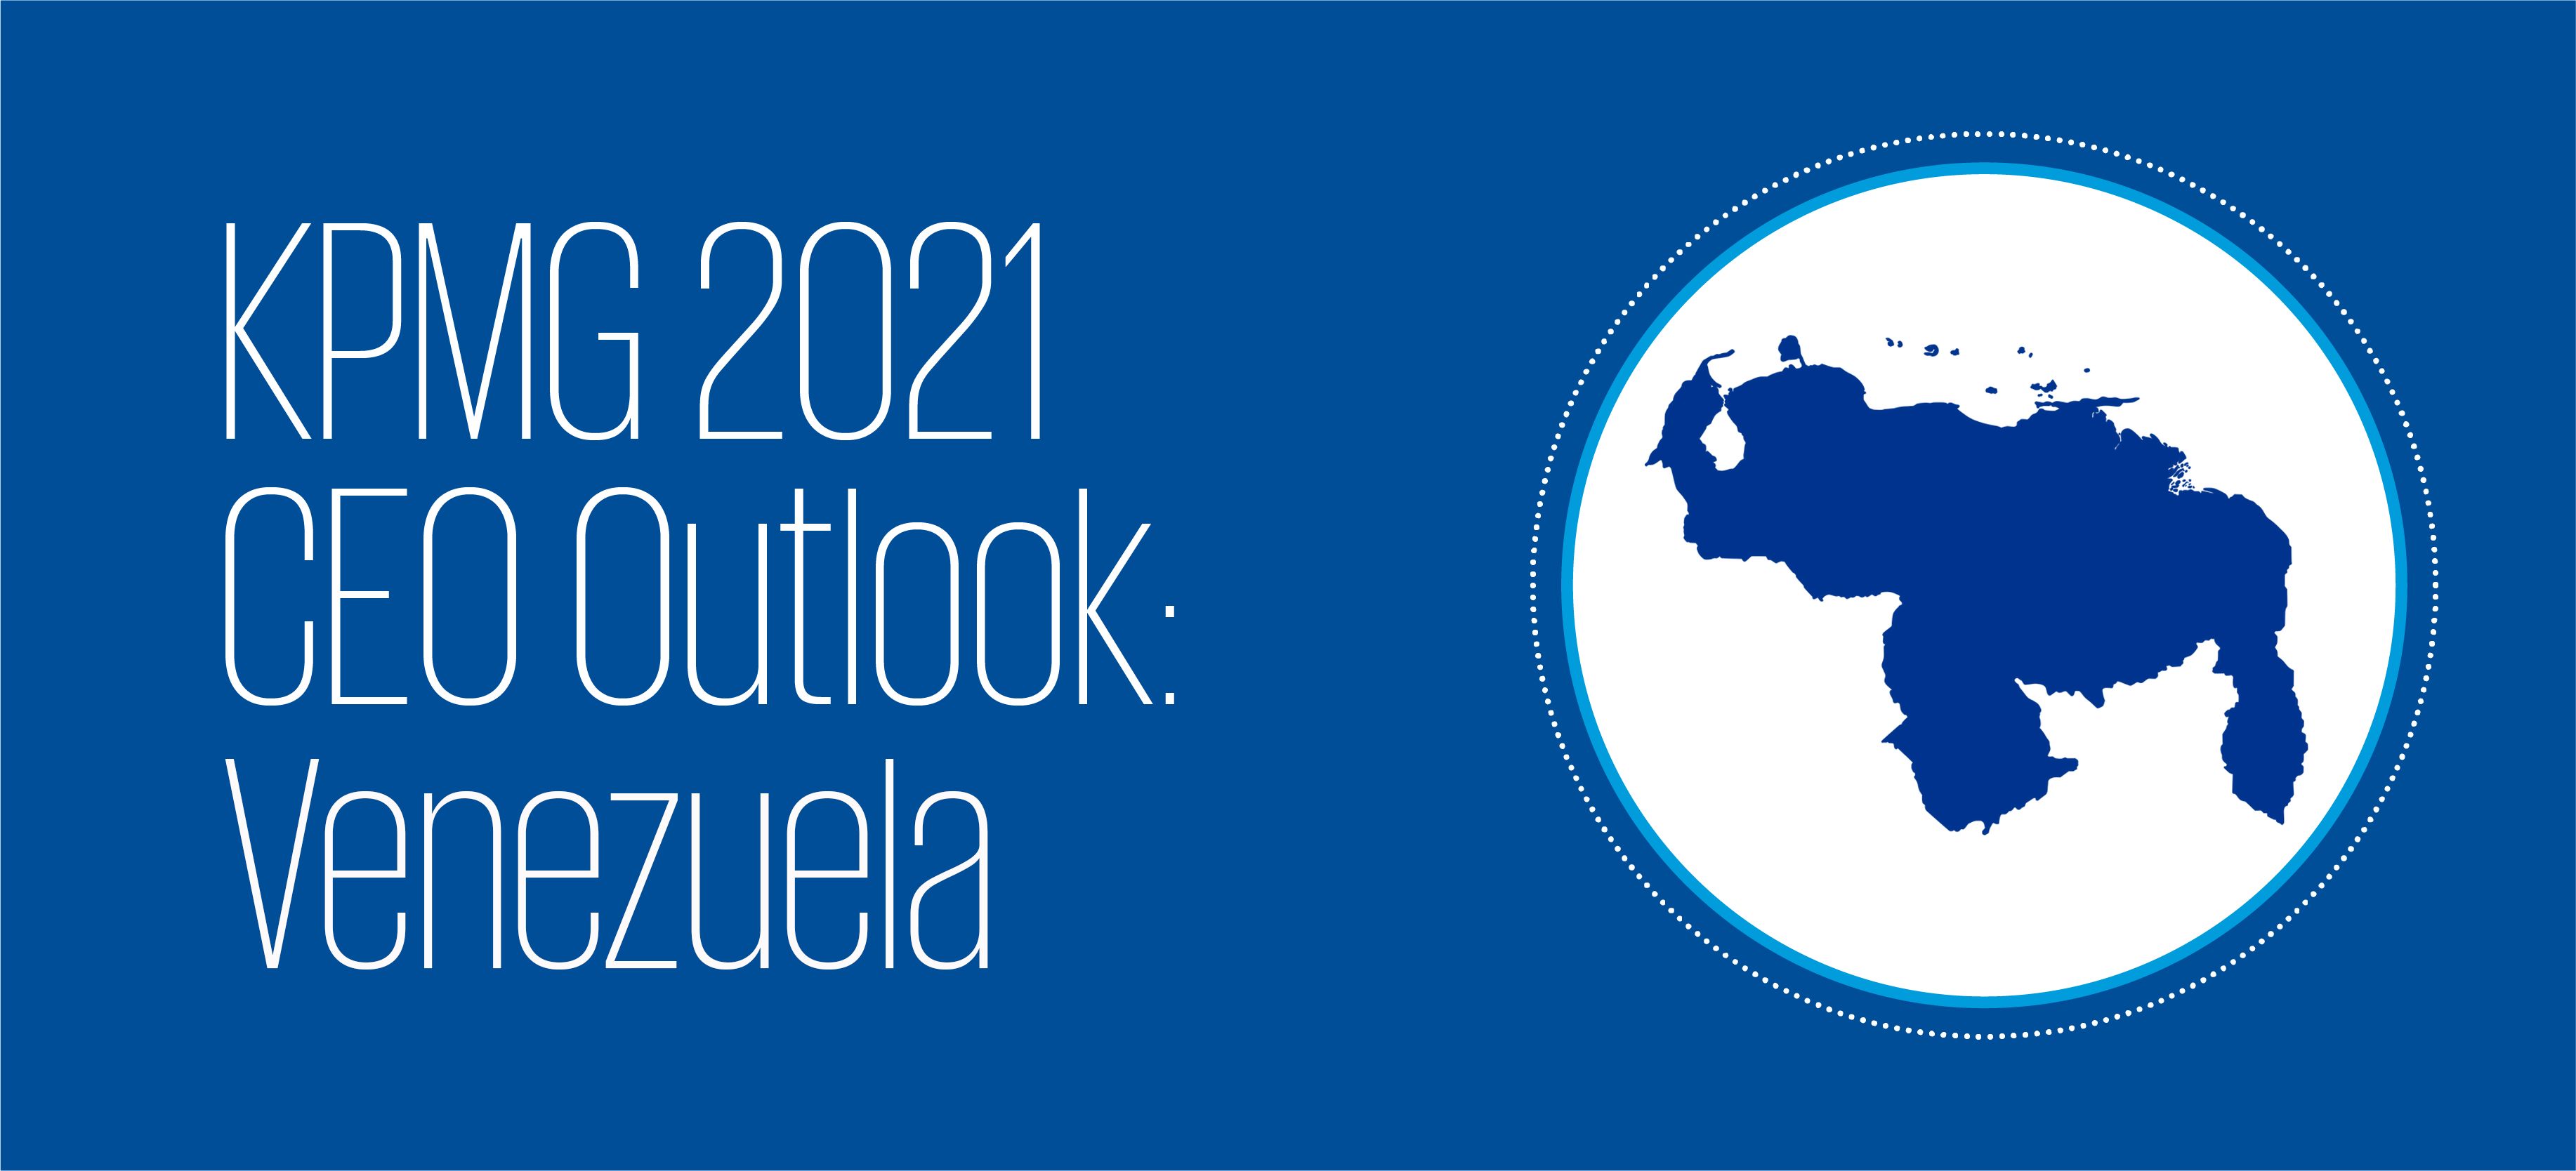 KPMG CEO Outlook 2021: Venezuela